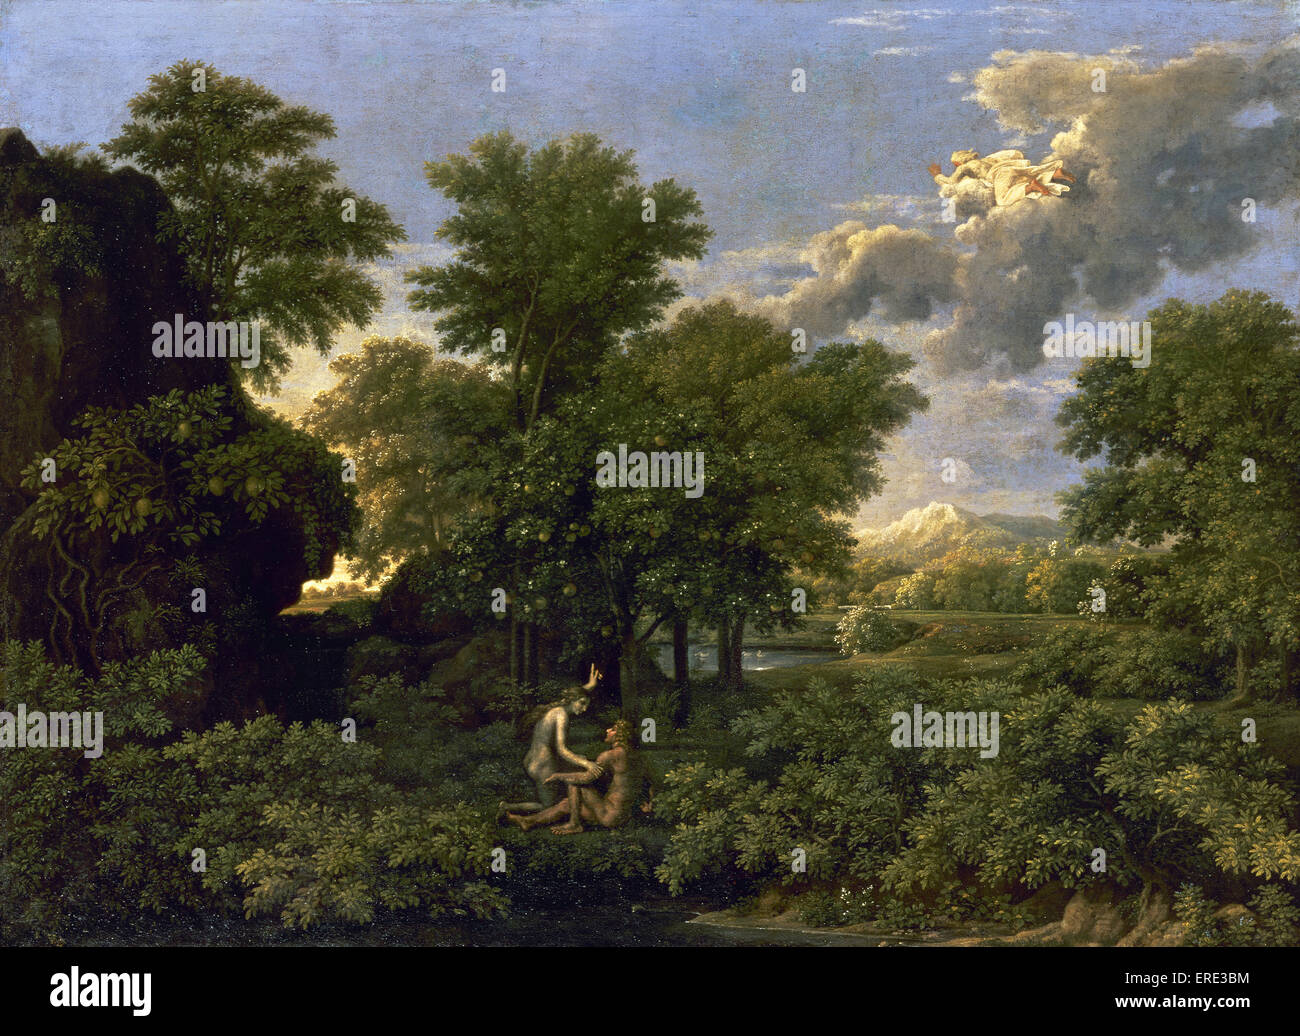 Nicolas Poussin (1594-1665). Französischer Maler. Frühling (das irdische Paradies). 1660. Klassizismus. Öl. Louvre-Museum. Paris. Frankreich. Stockfoto